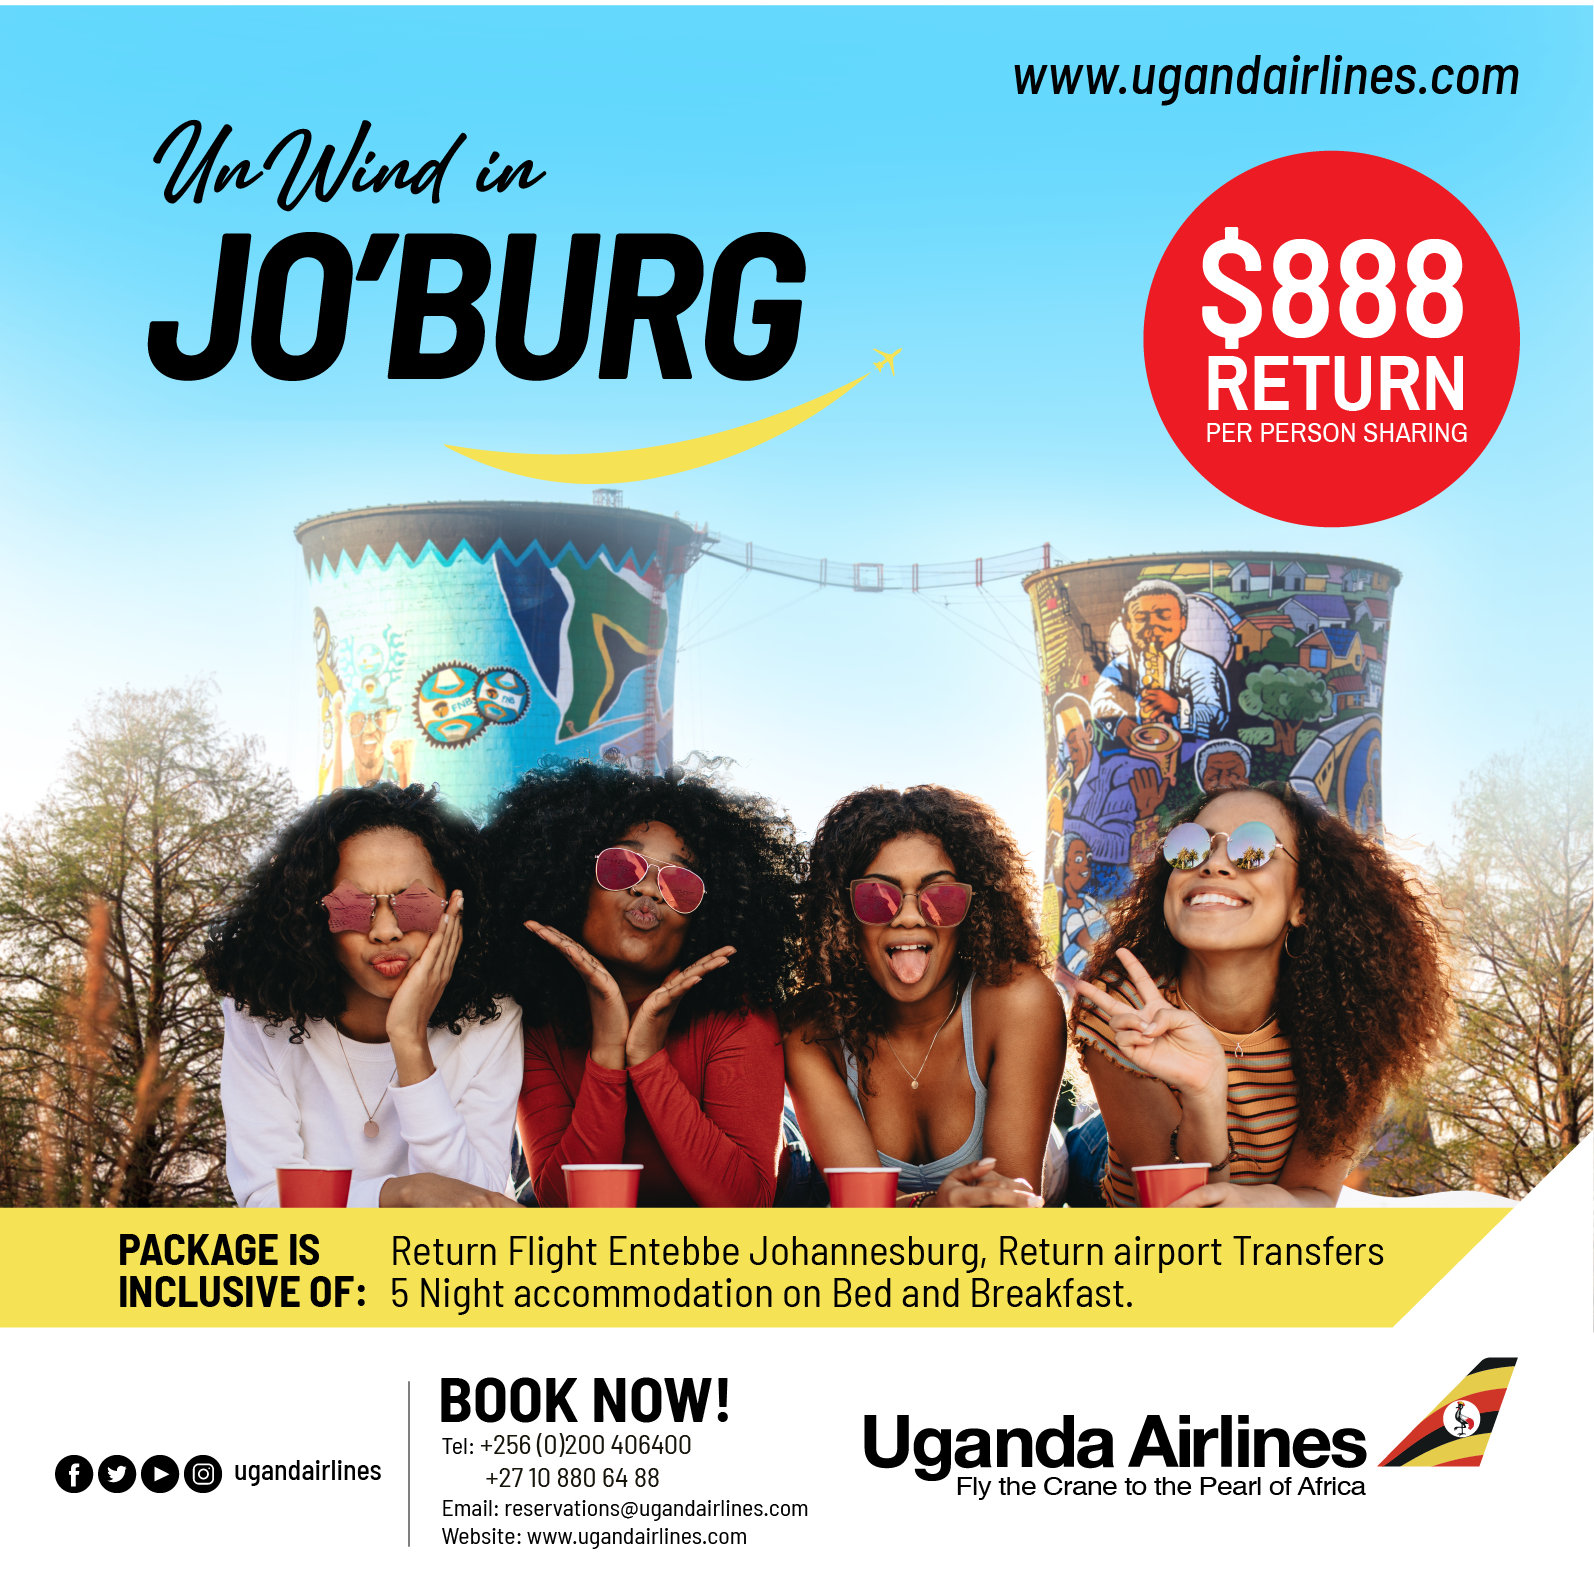 Unwind in JO’BURG – with Uganda Airlines